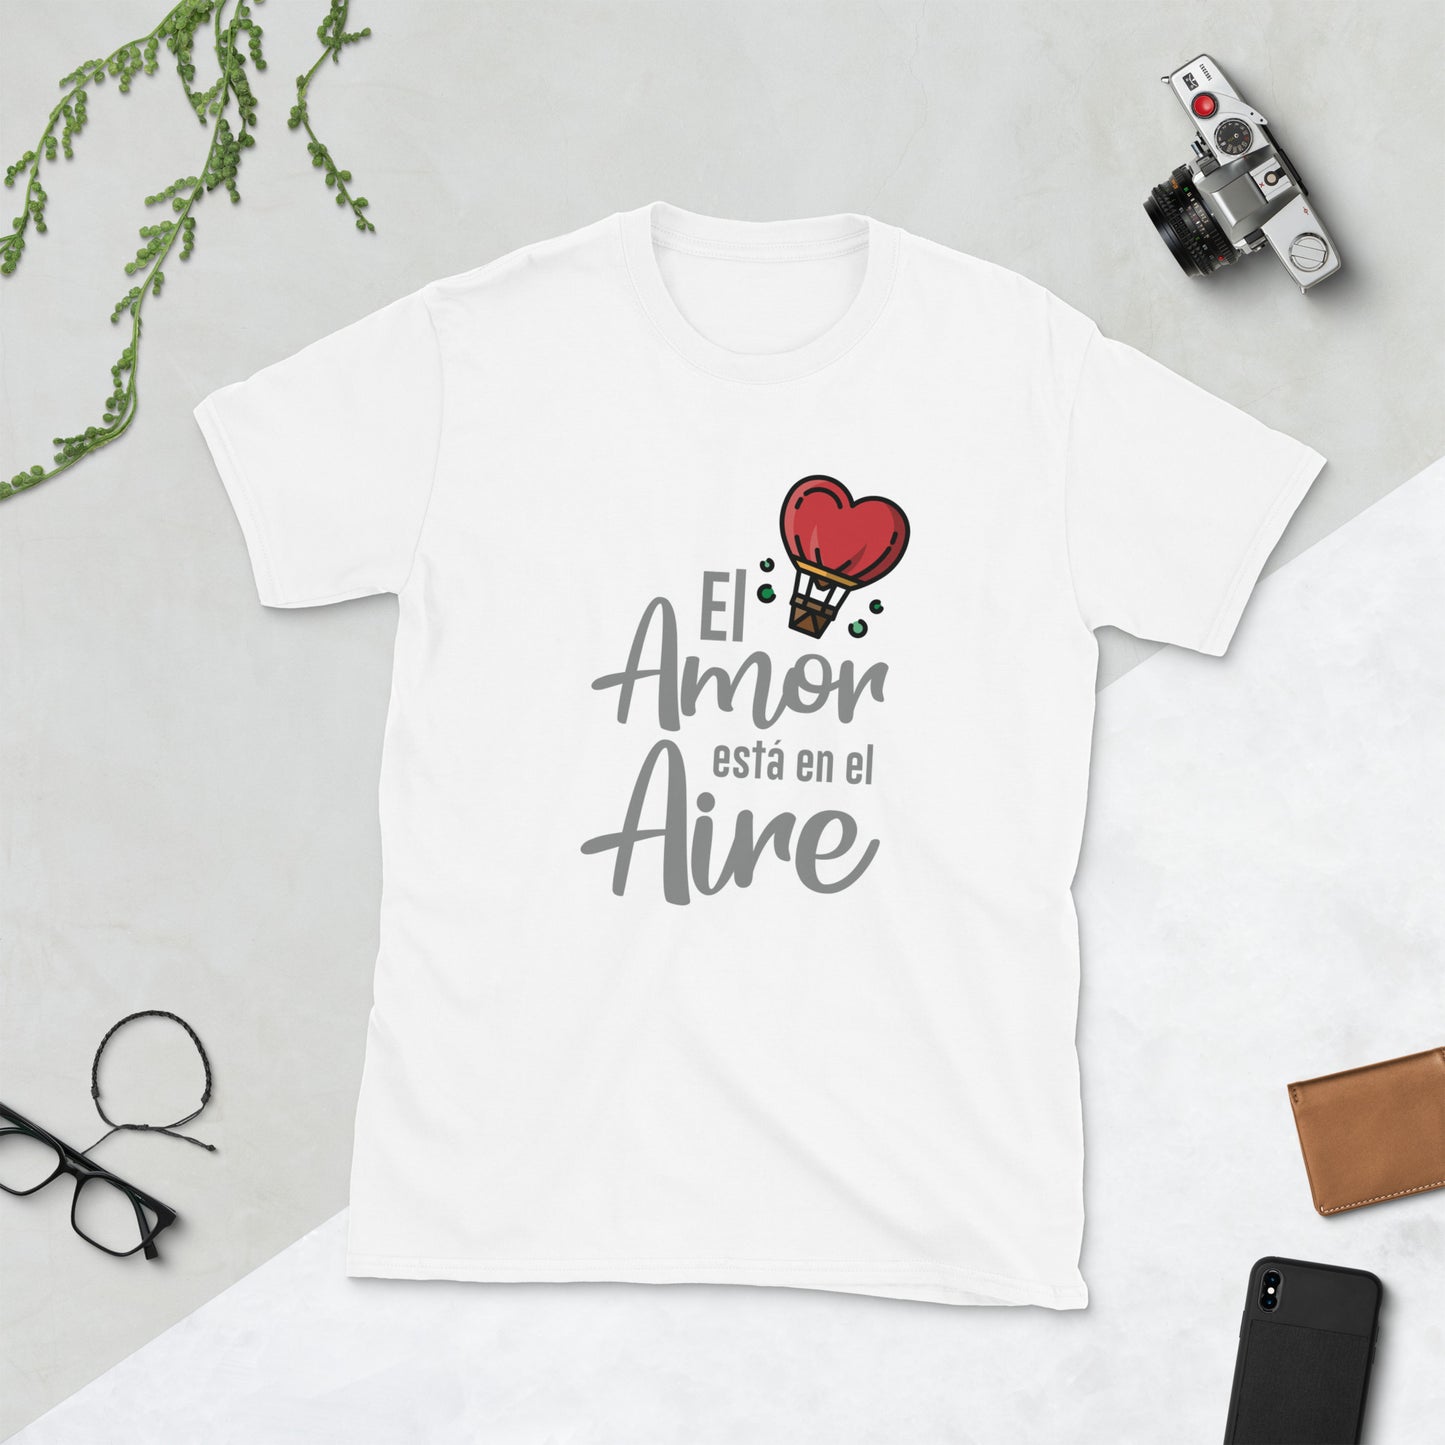 Love is in the air Anti-love T-shirt